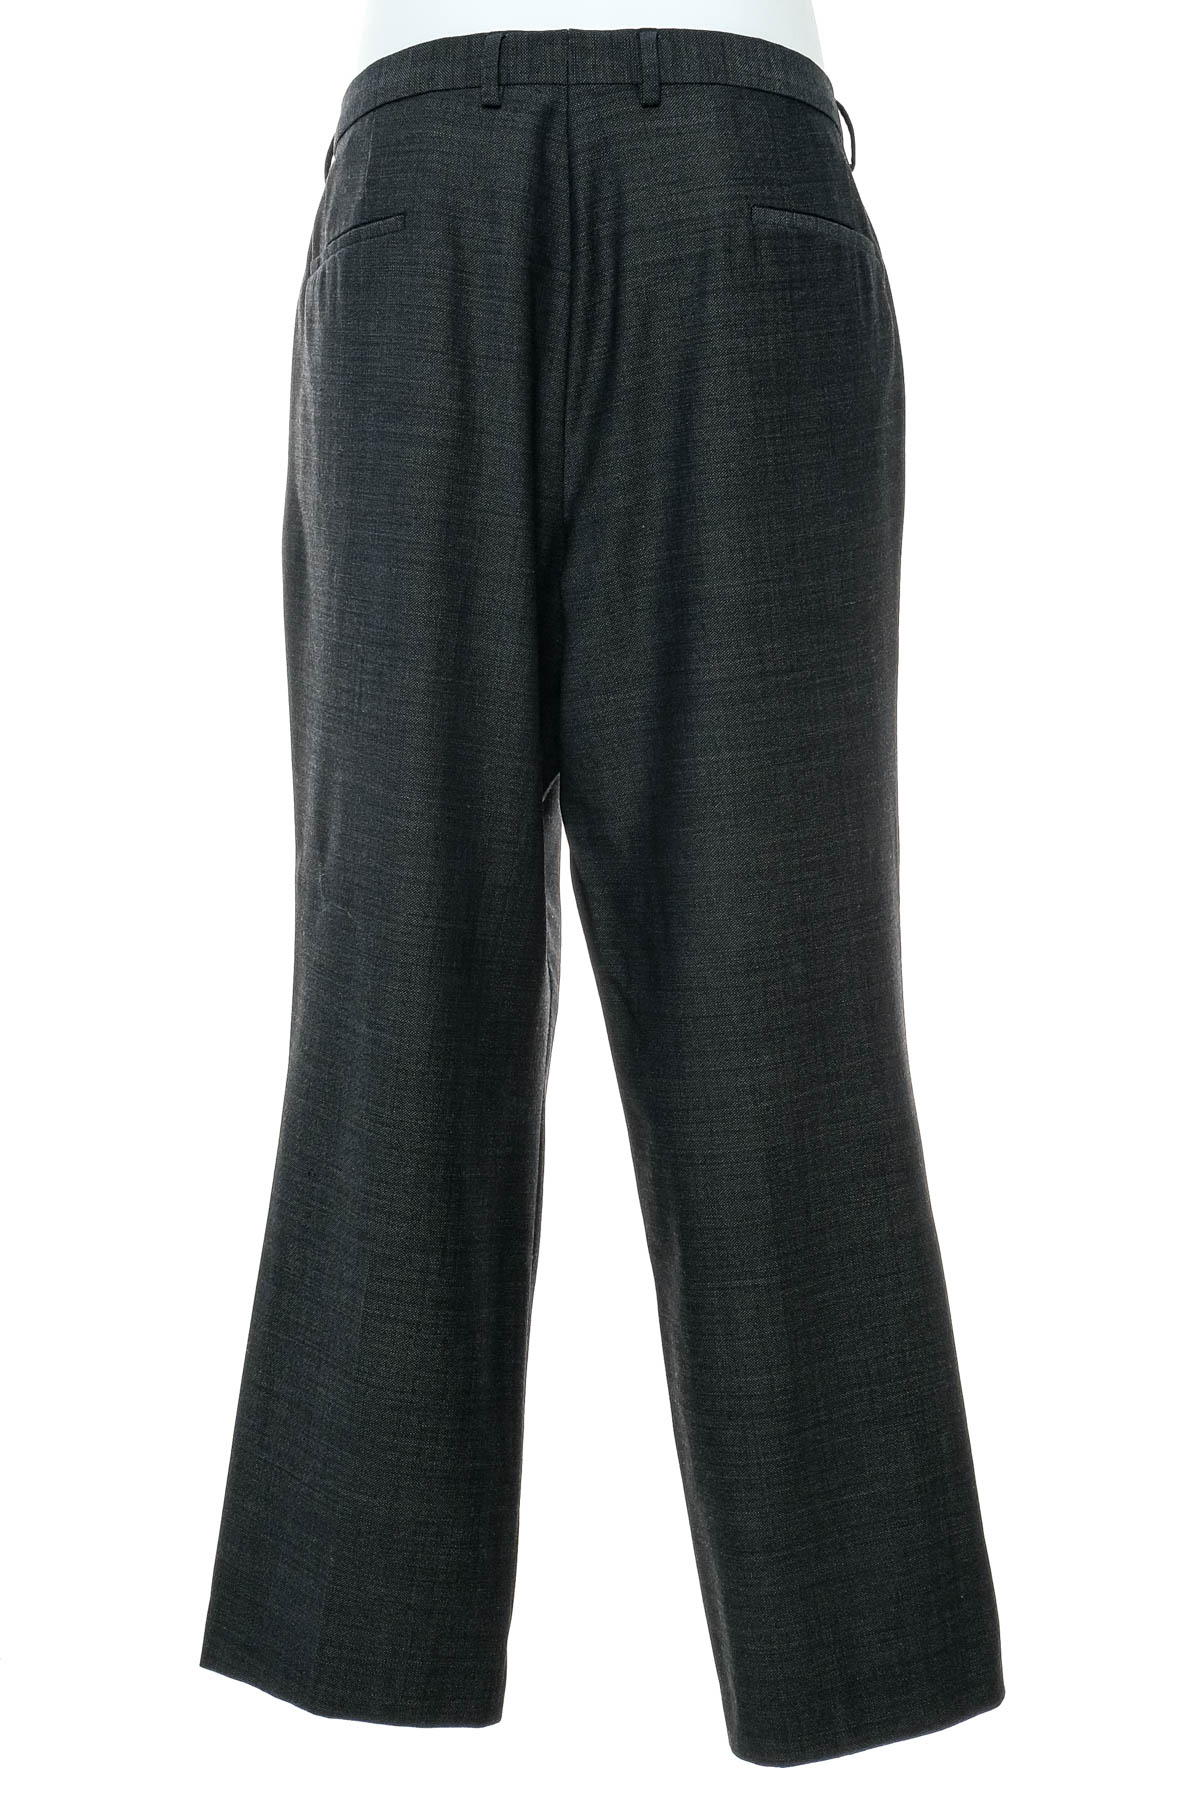 Pantalon pentru bărbați - BOSS - 1